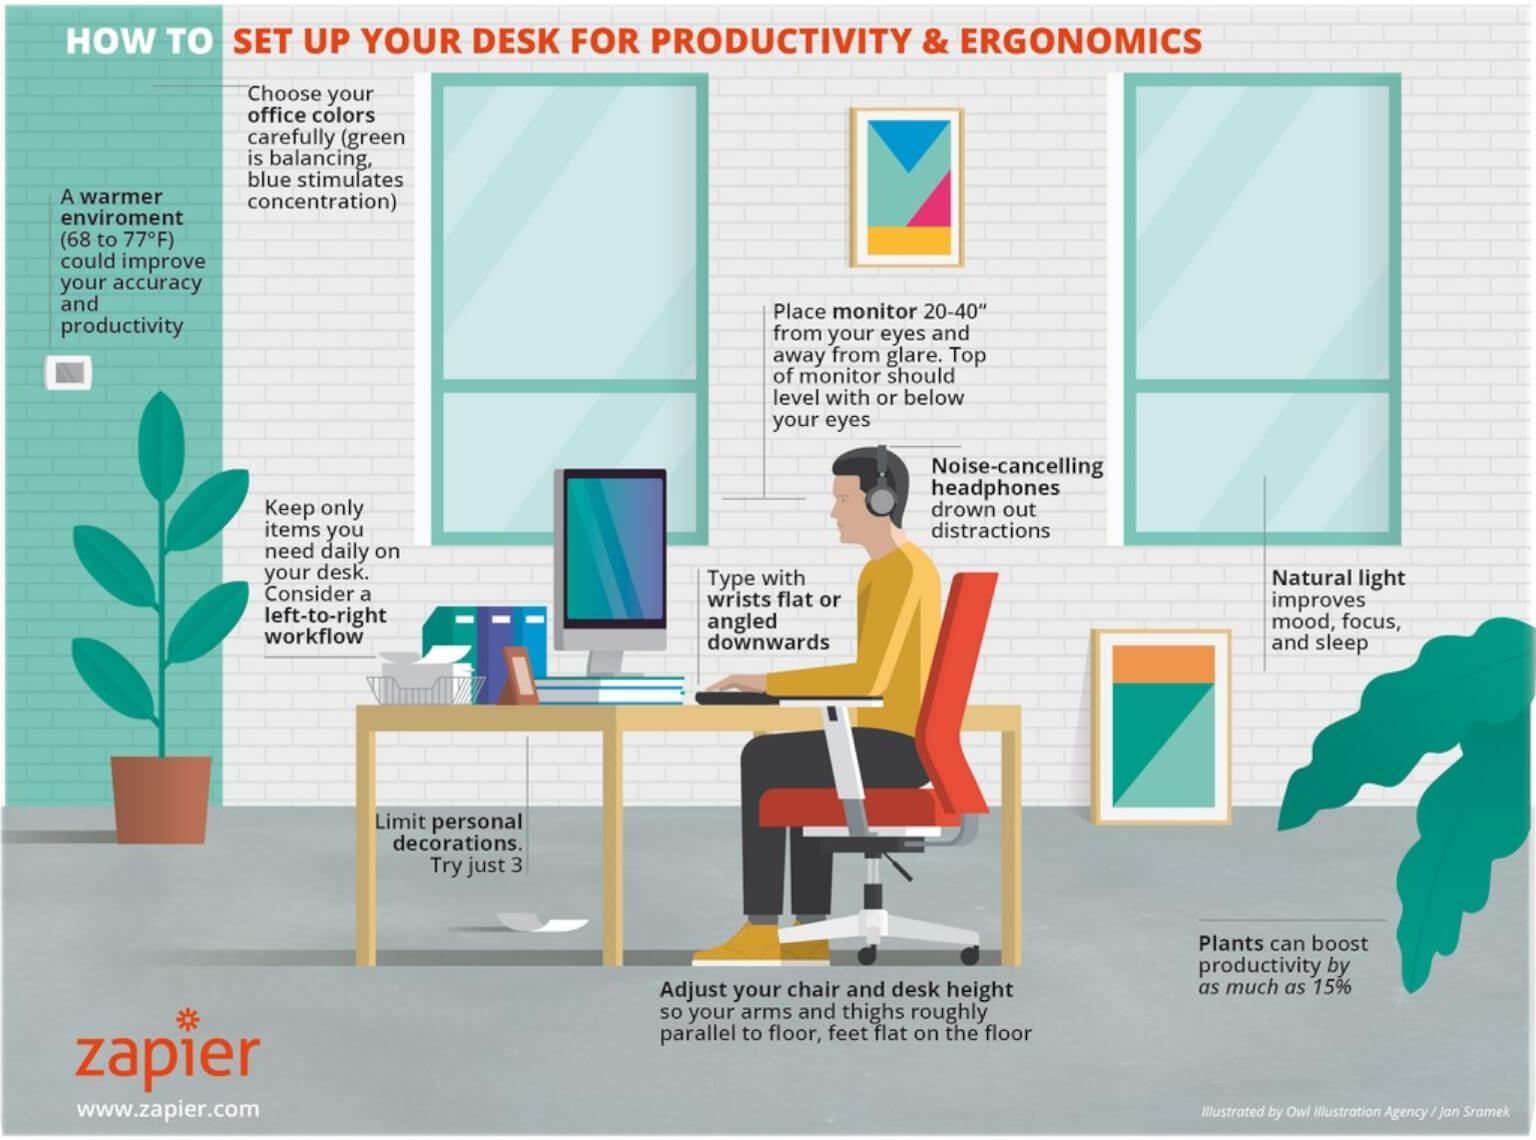 How to set up your desk for productivity & ergonomics